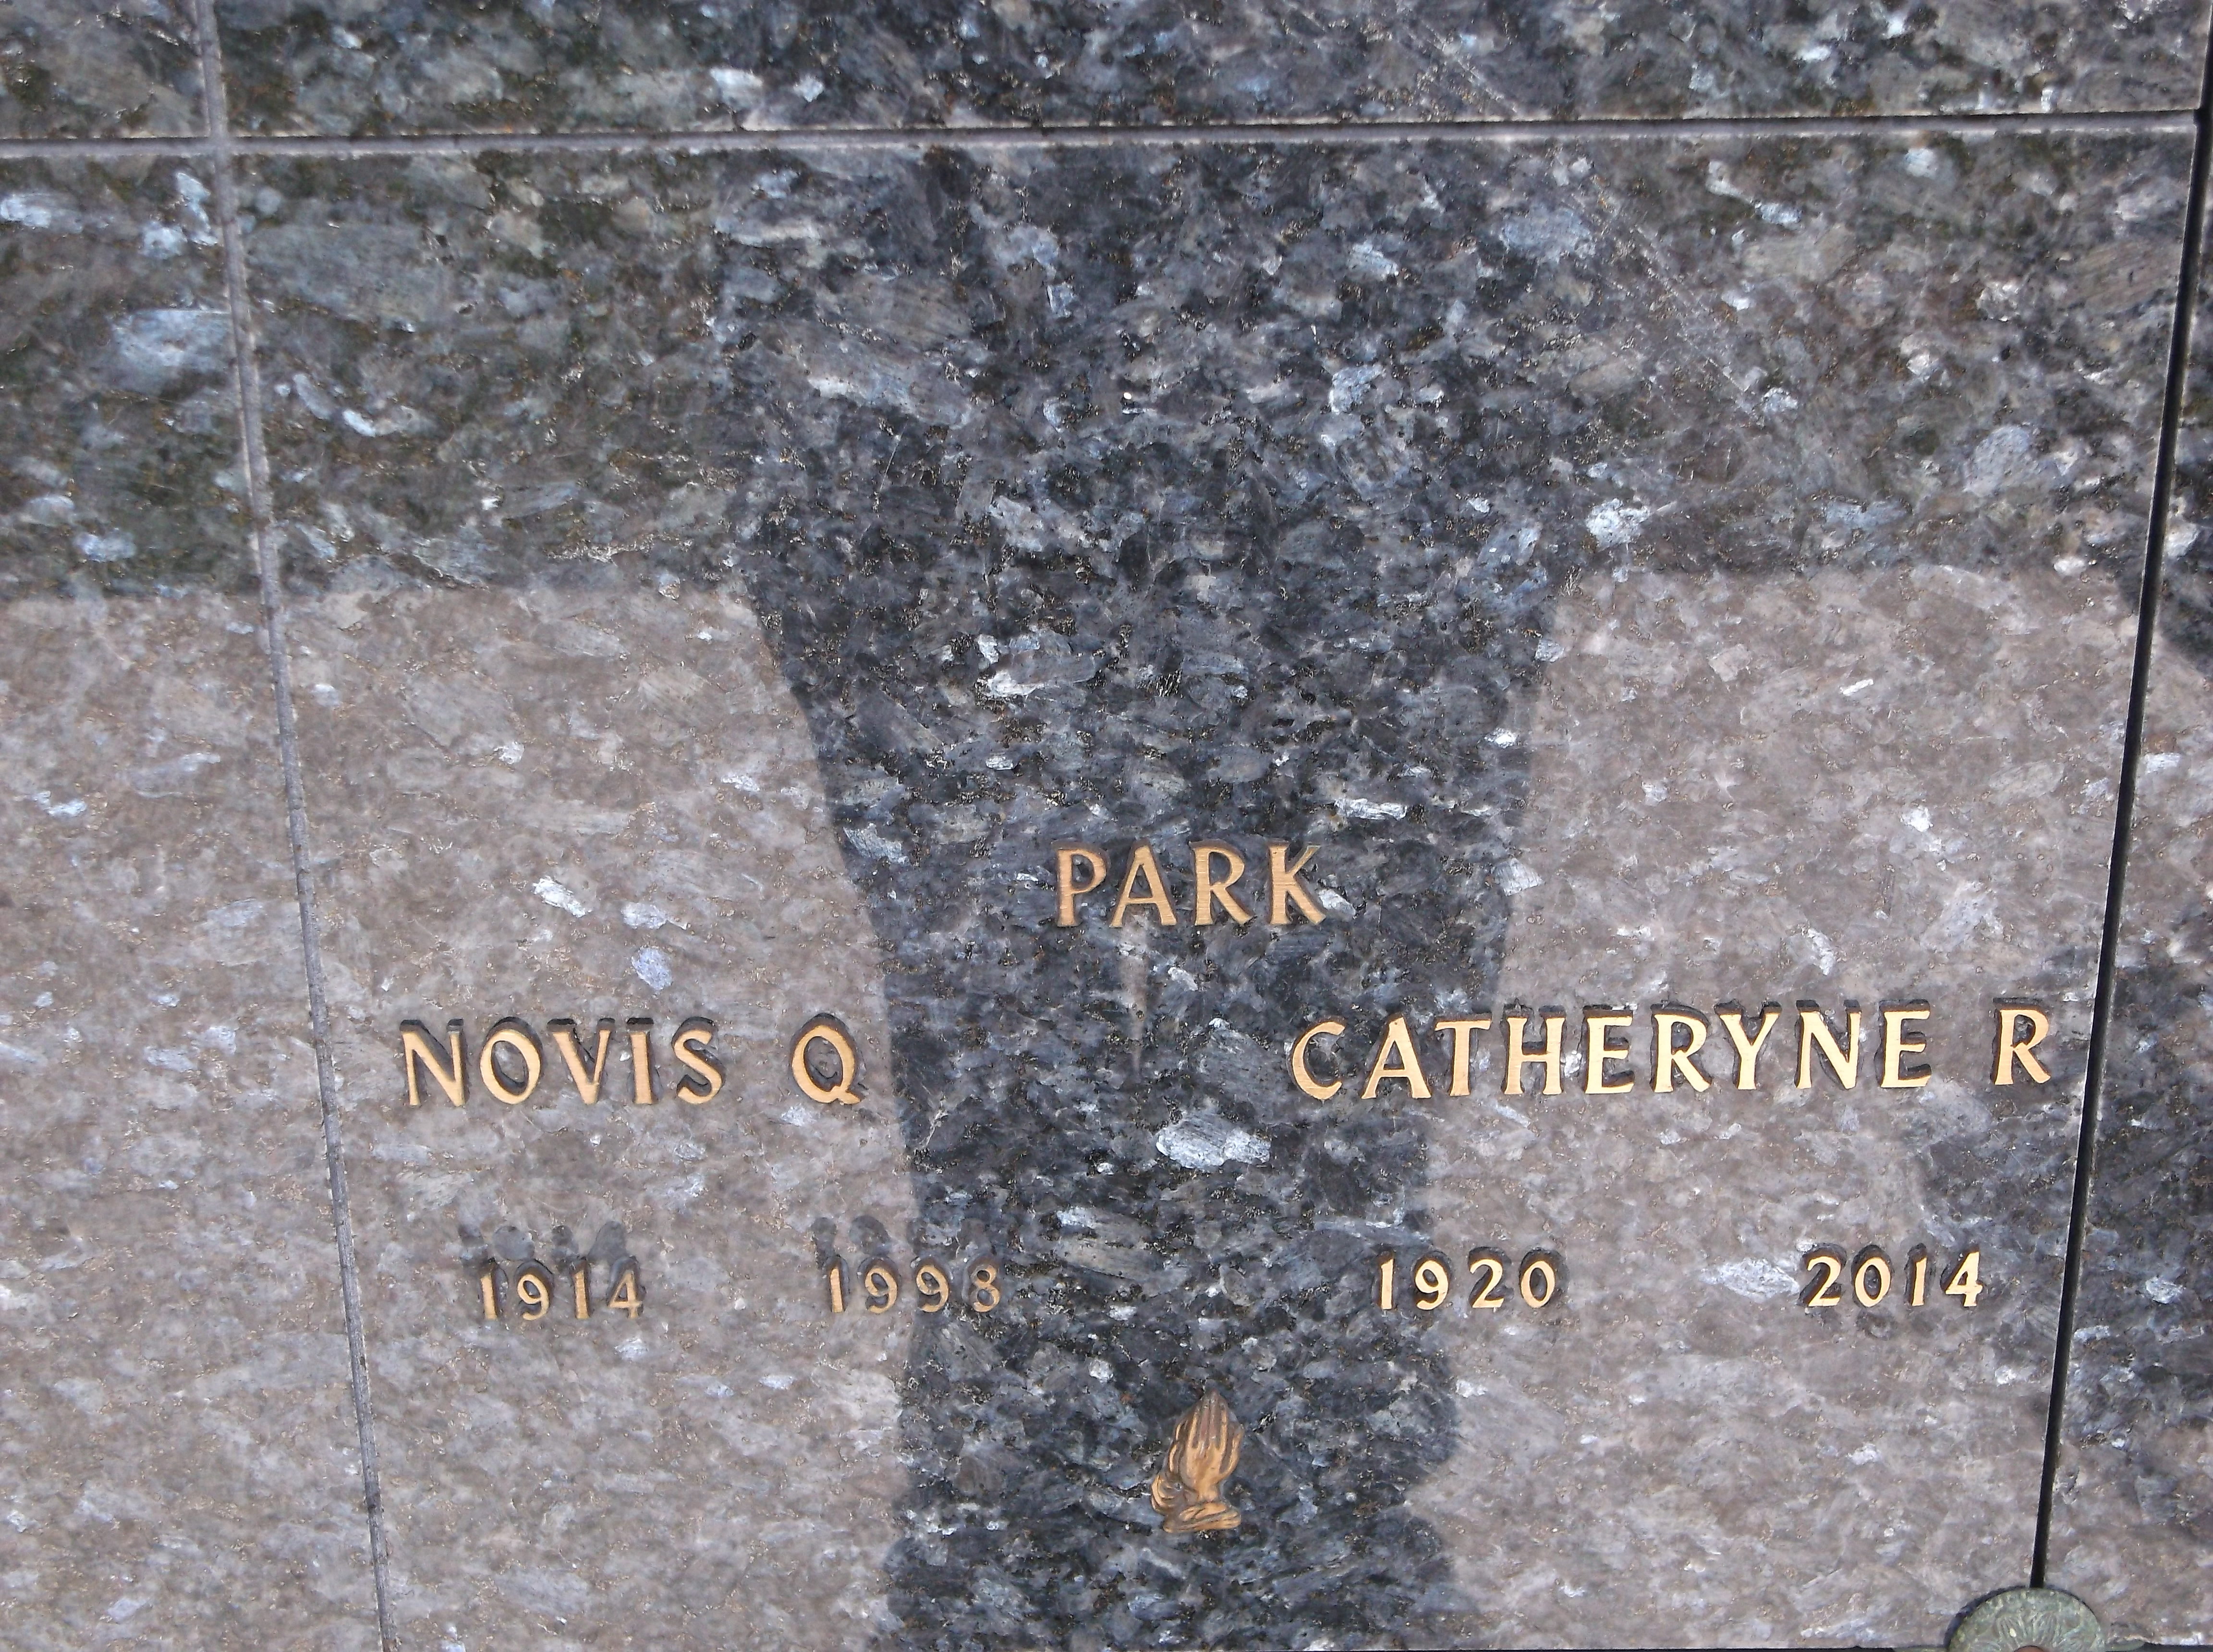 Catheryne R Park